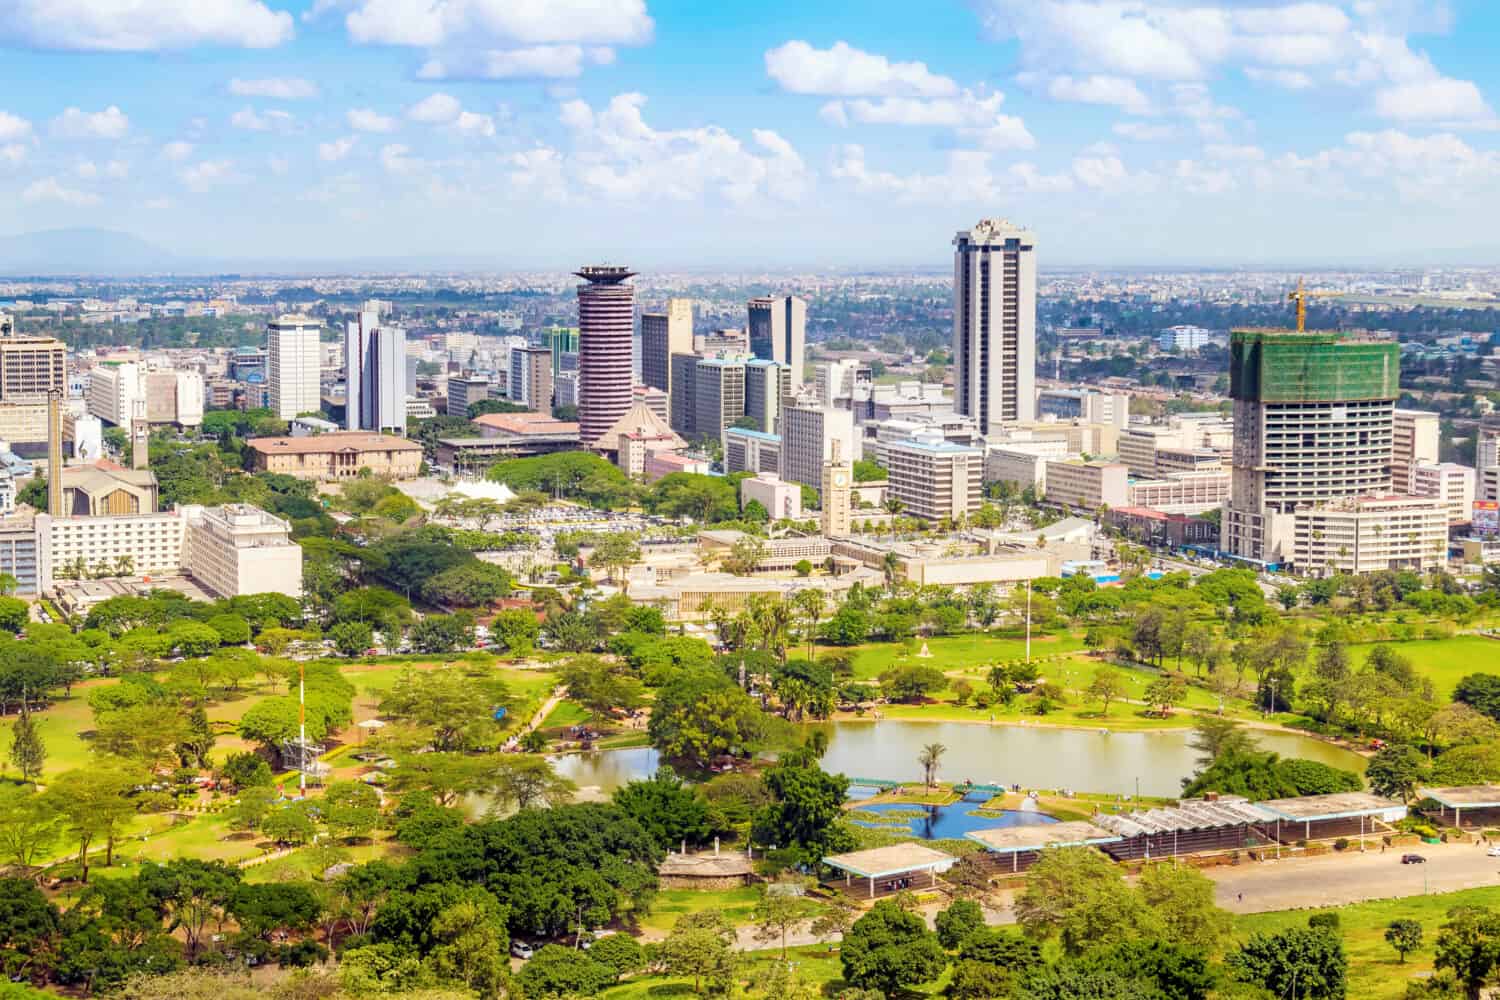 Nairobi cityscape - capital city of Kenya, East Africa